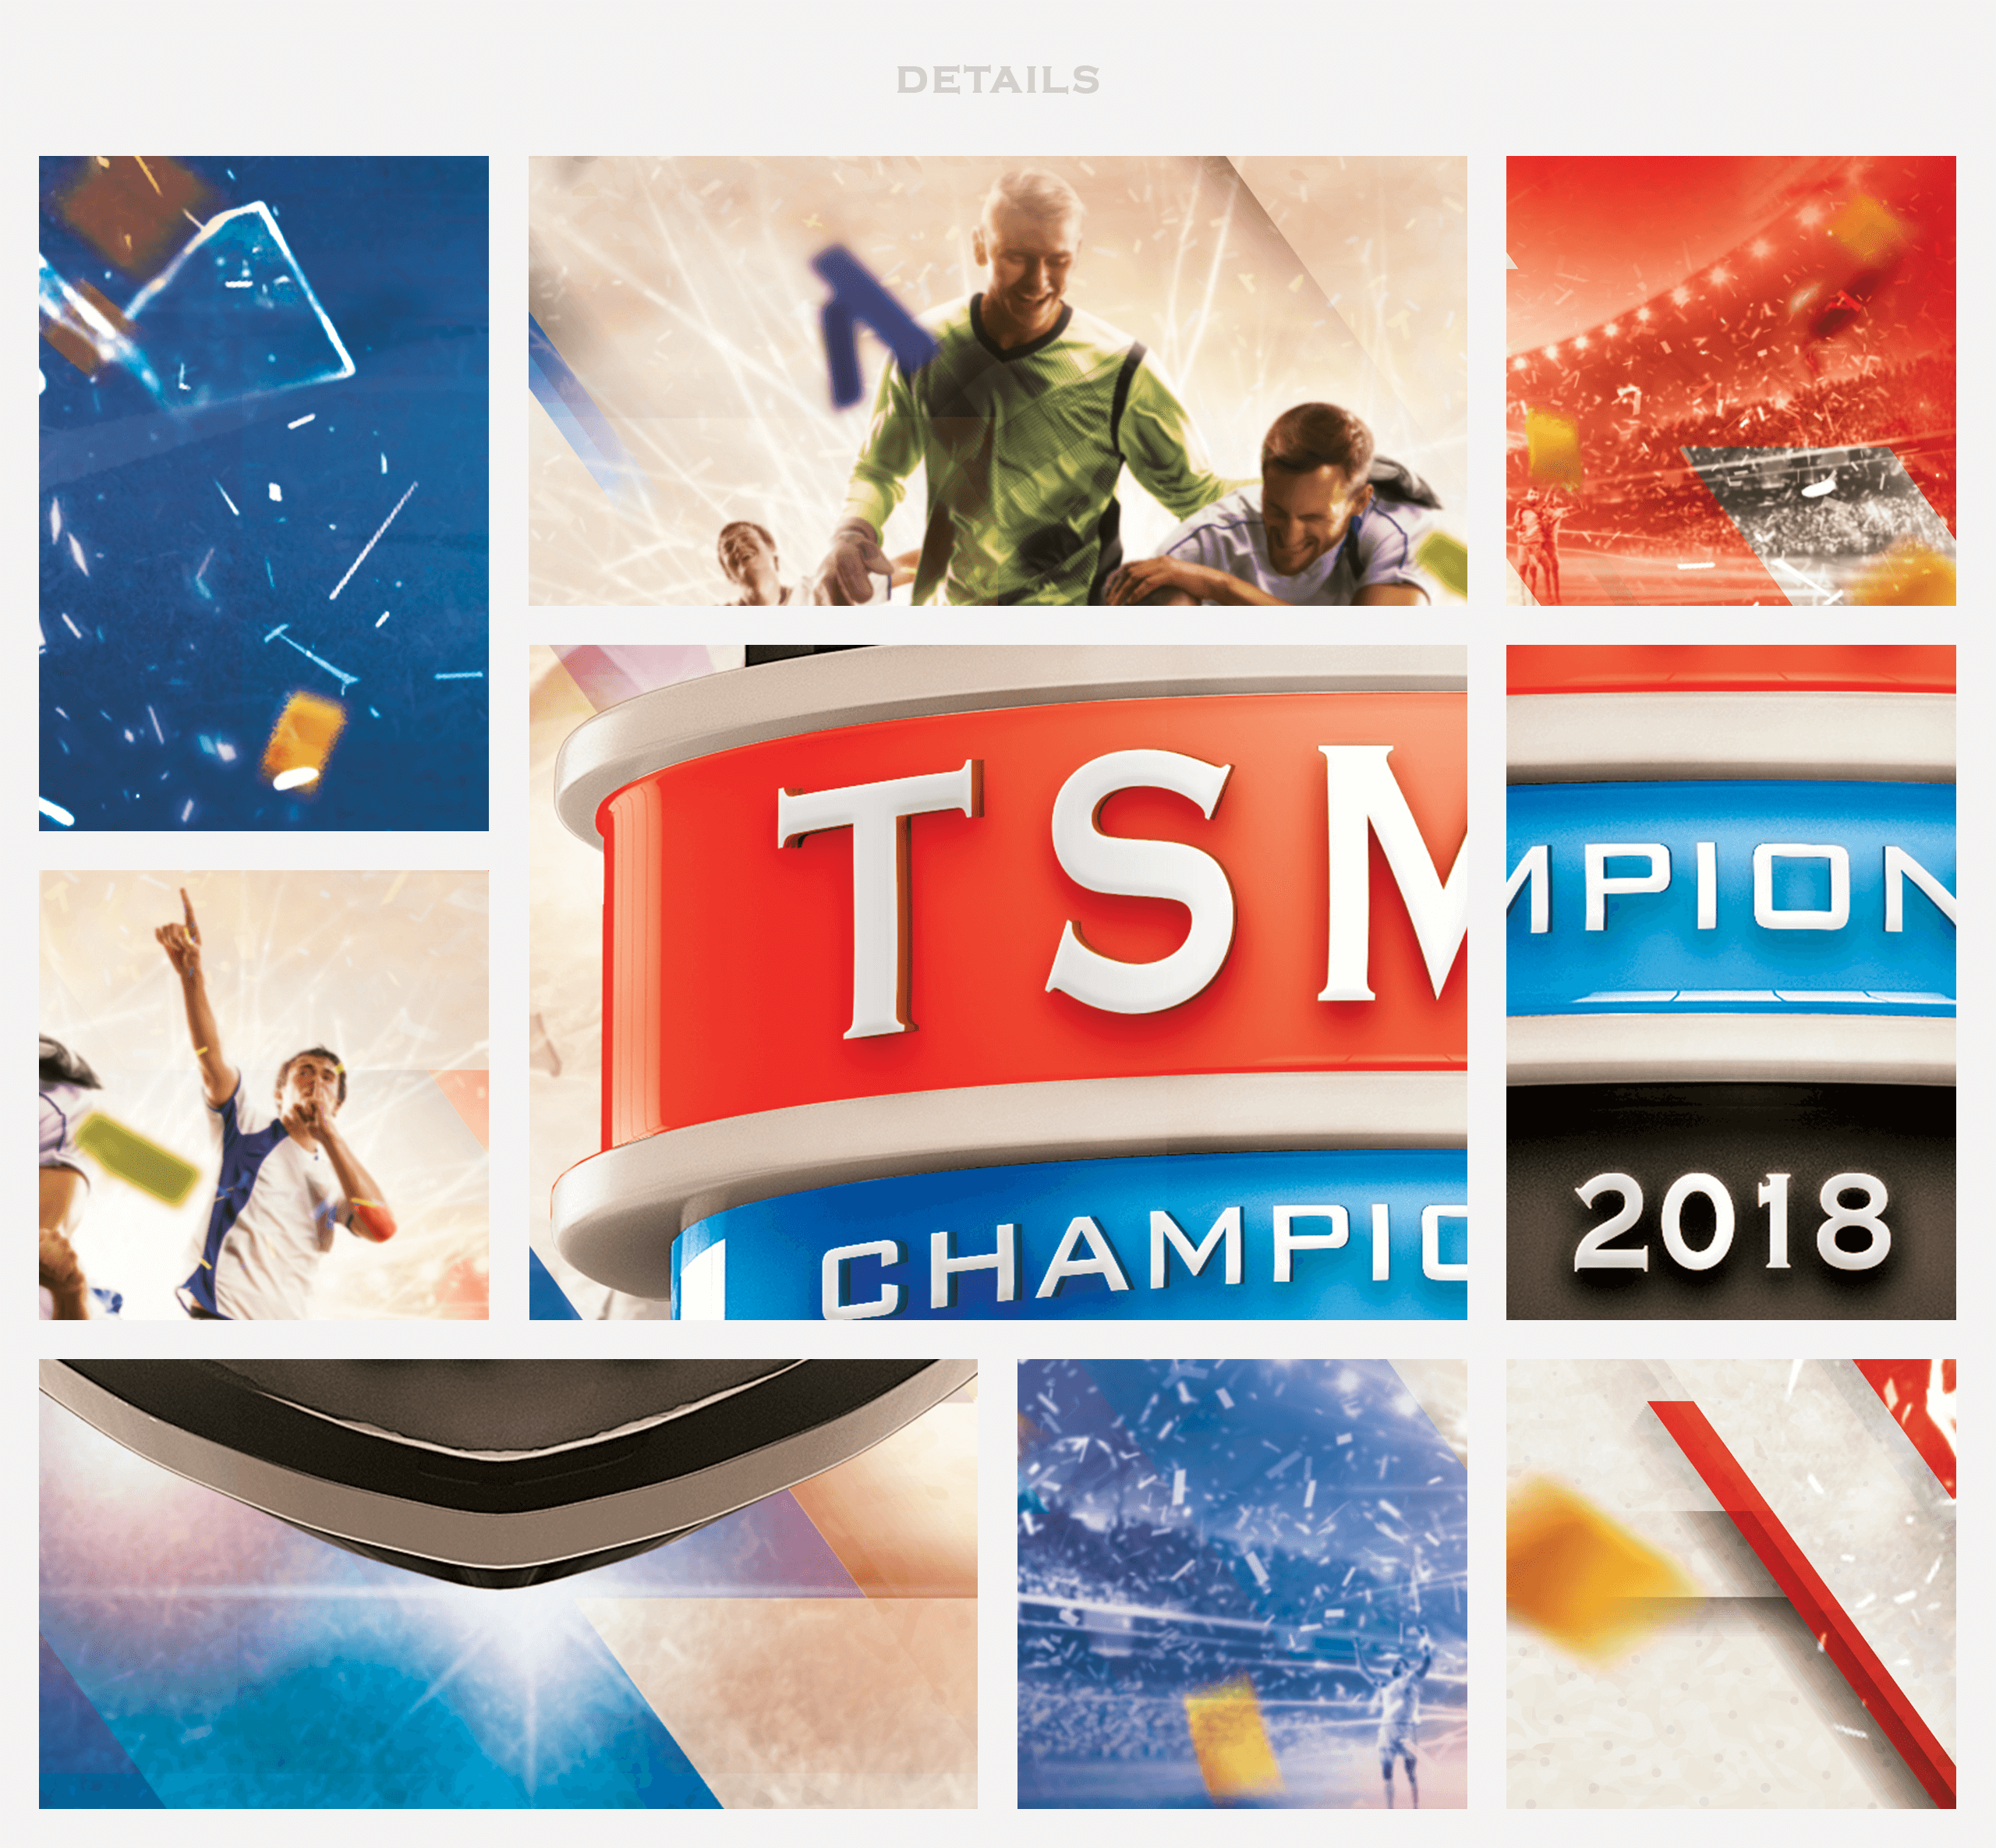 TSMNI CHAMPIONSHIP 2018 - Uptown Sports Annual Event - Syed Shahab Event Branding